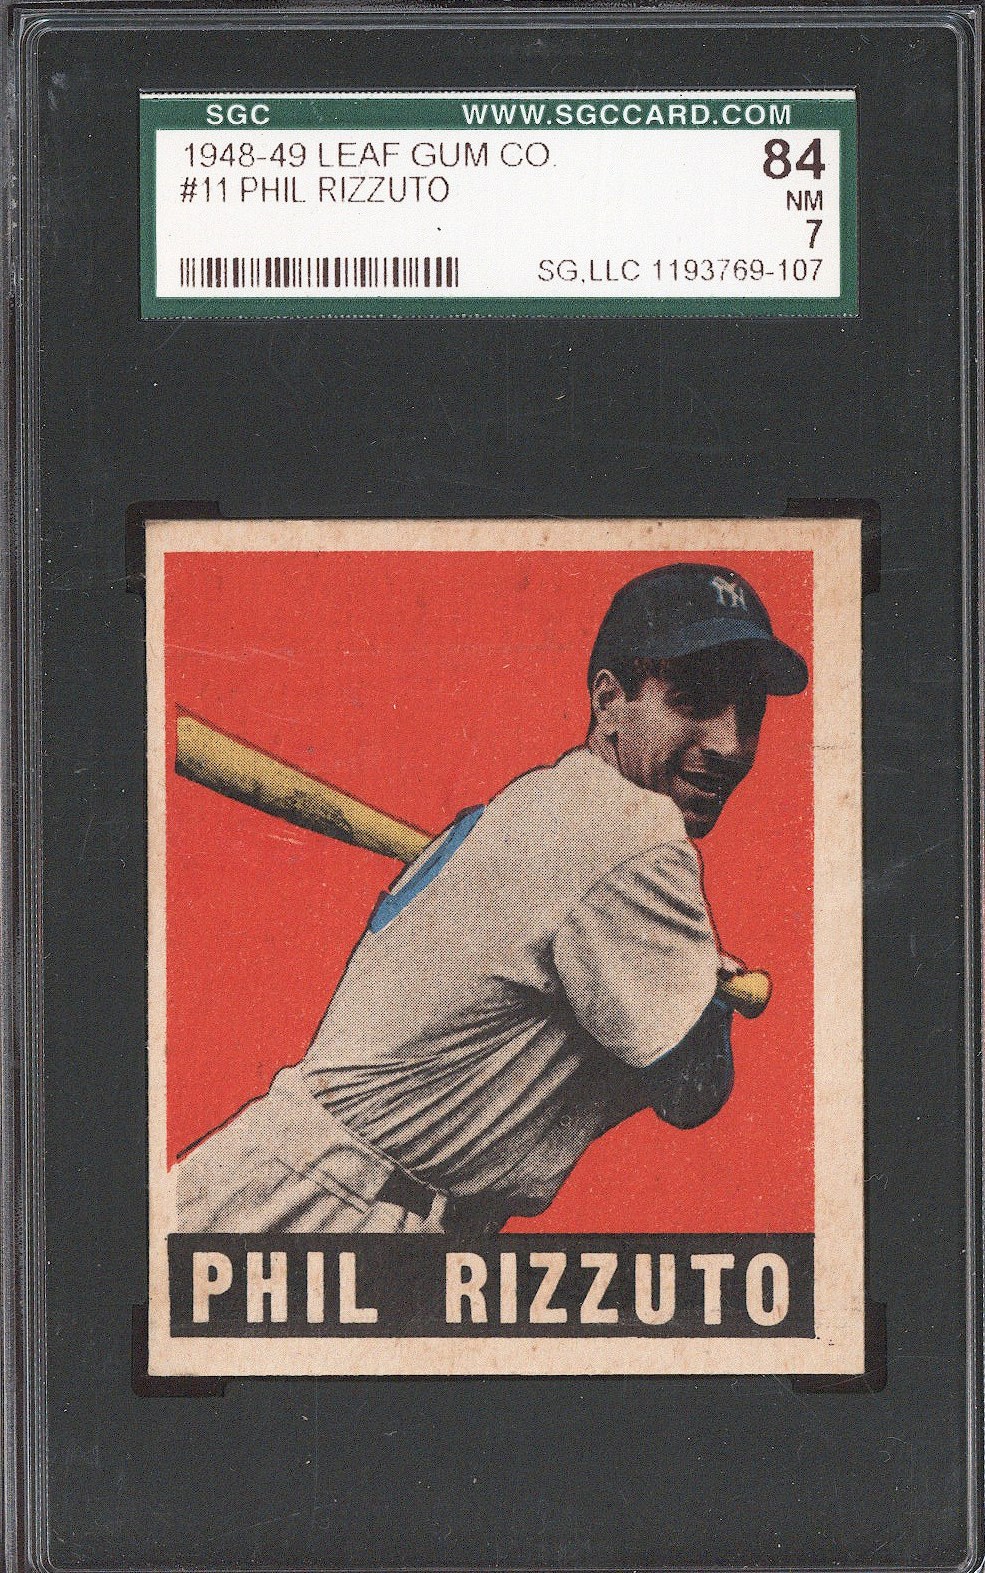 1948 Leaf #11 Phil Rizzuto (HOF) - SGC NM 7